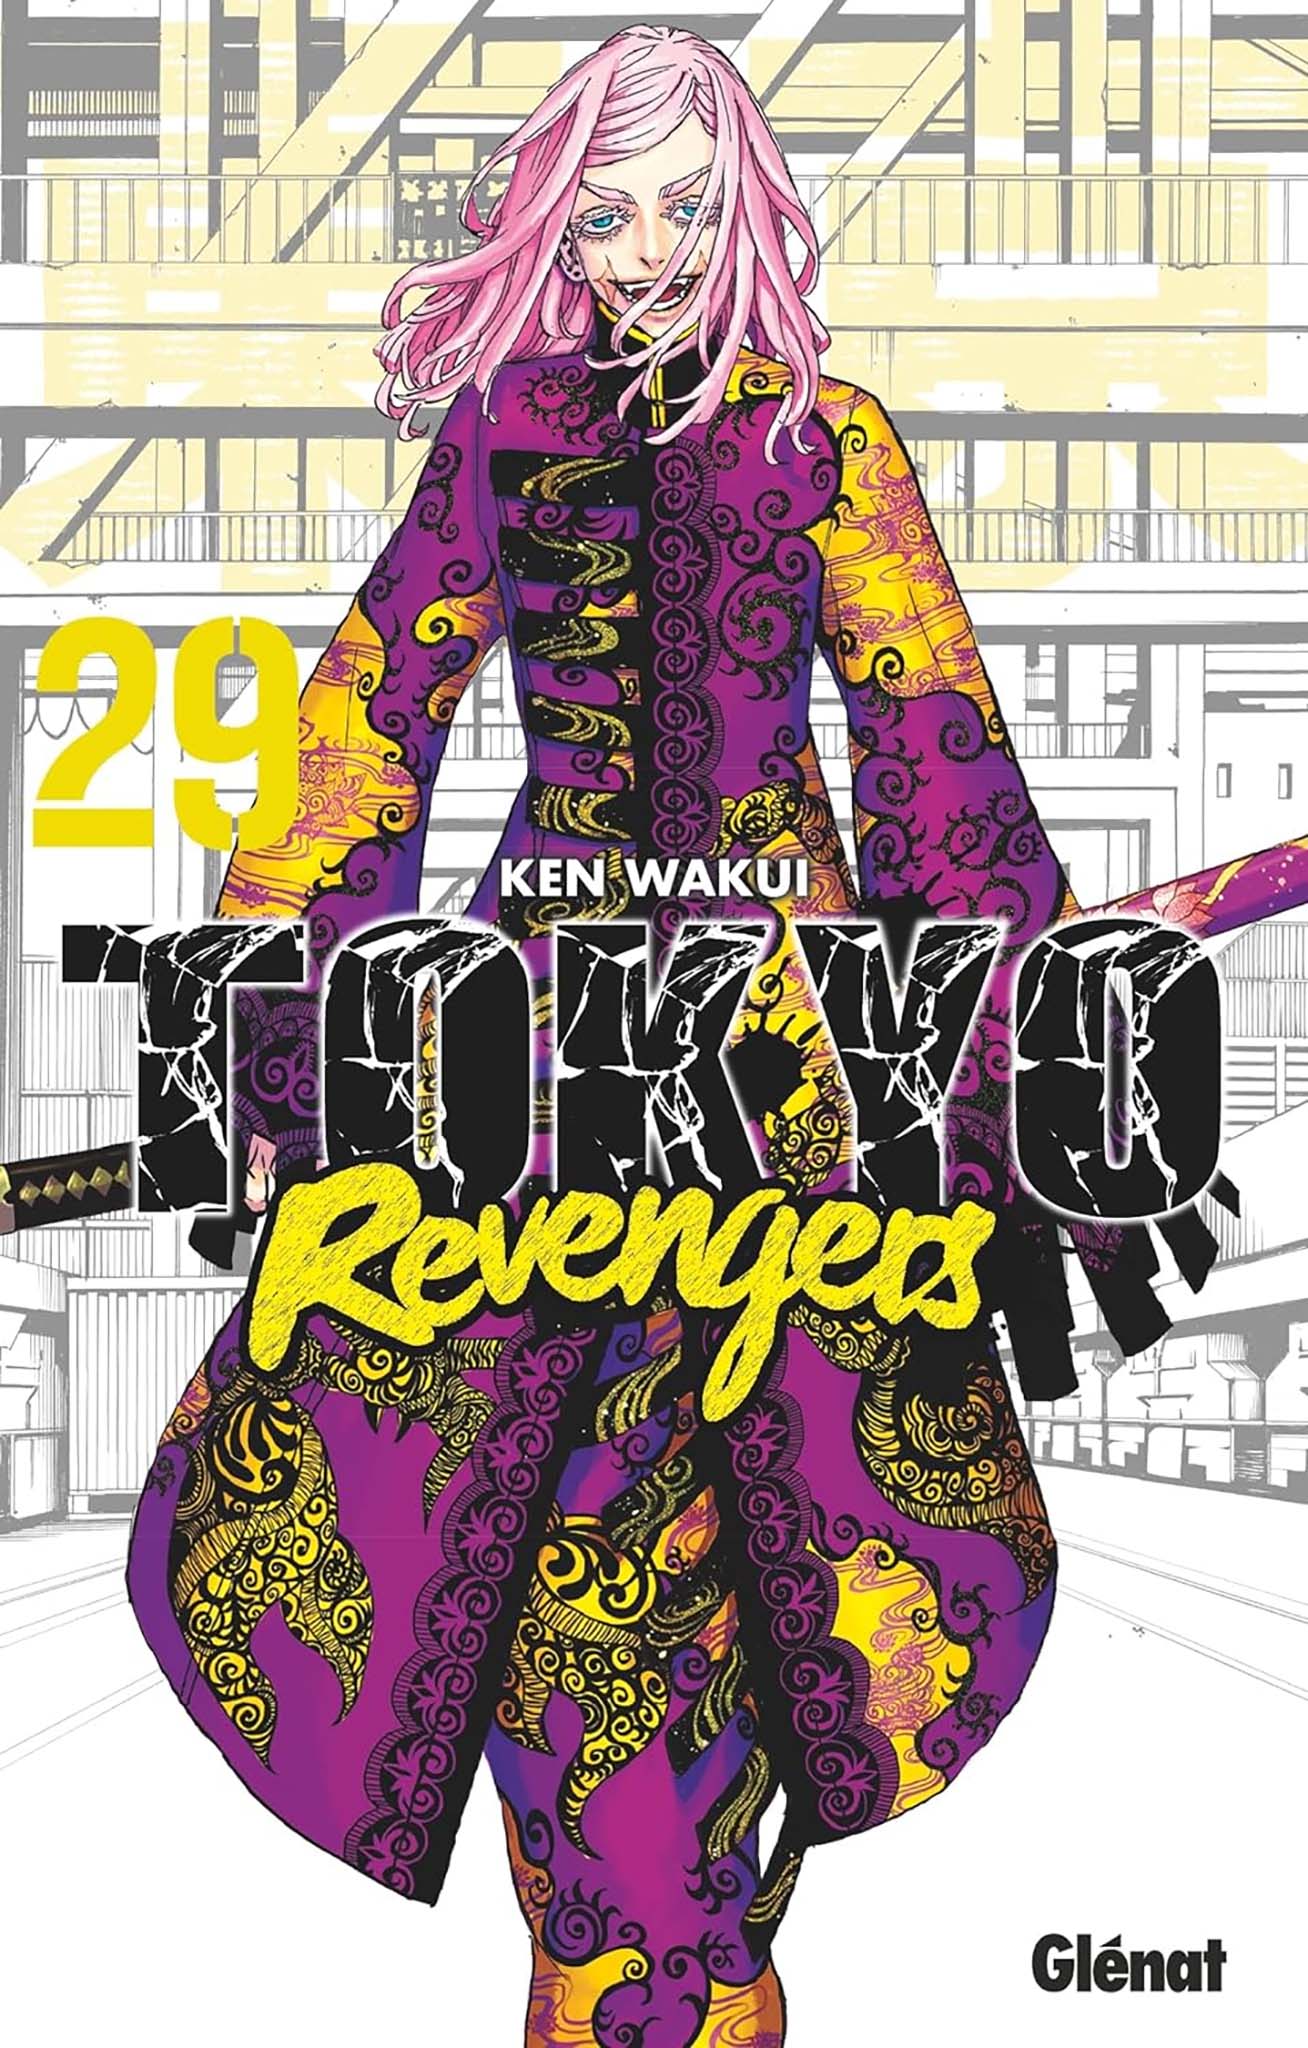 Tome 29 du manga Tokyo Revengers.